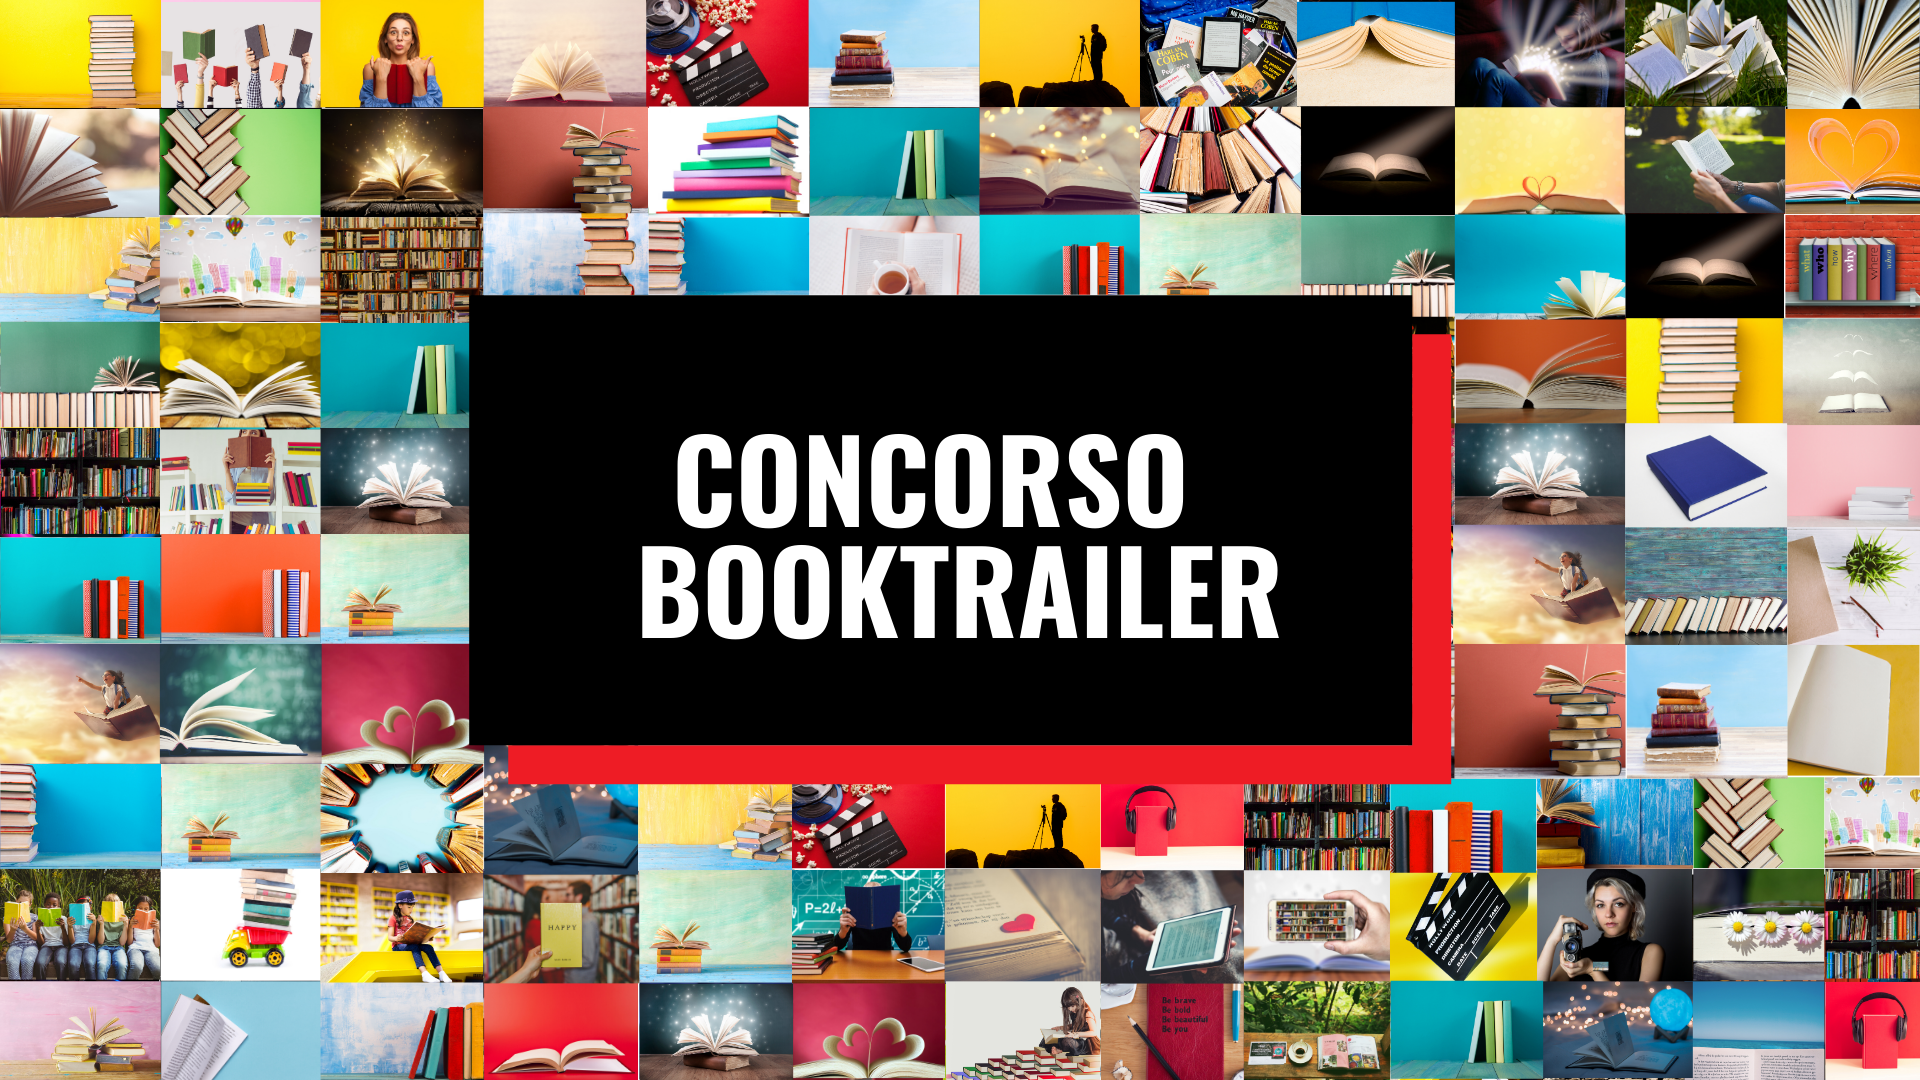 CONCORSO-BOOKTRAILER-SITO